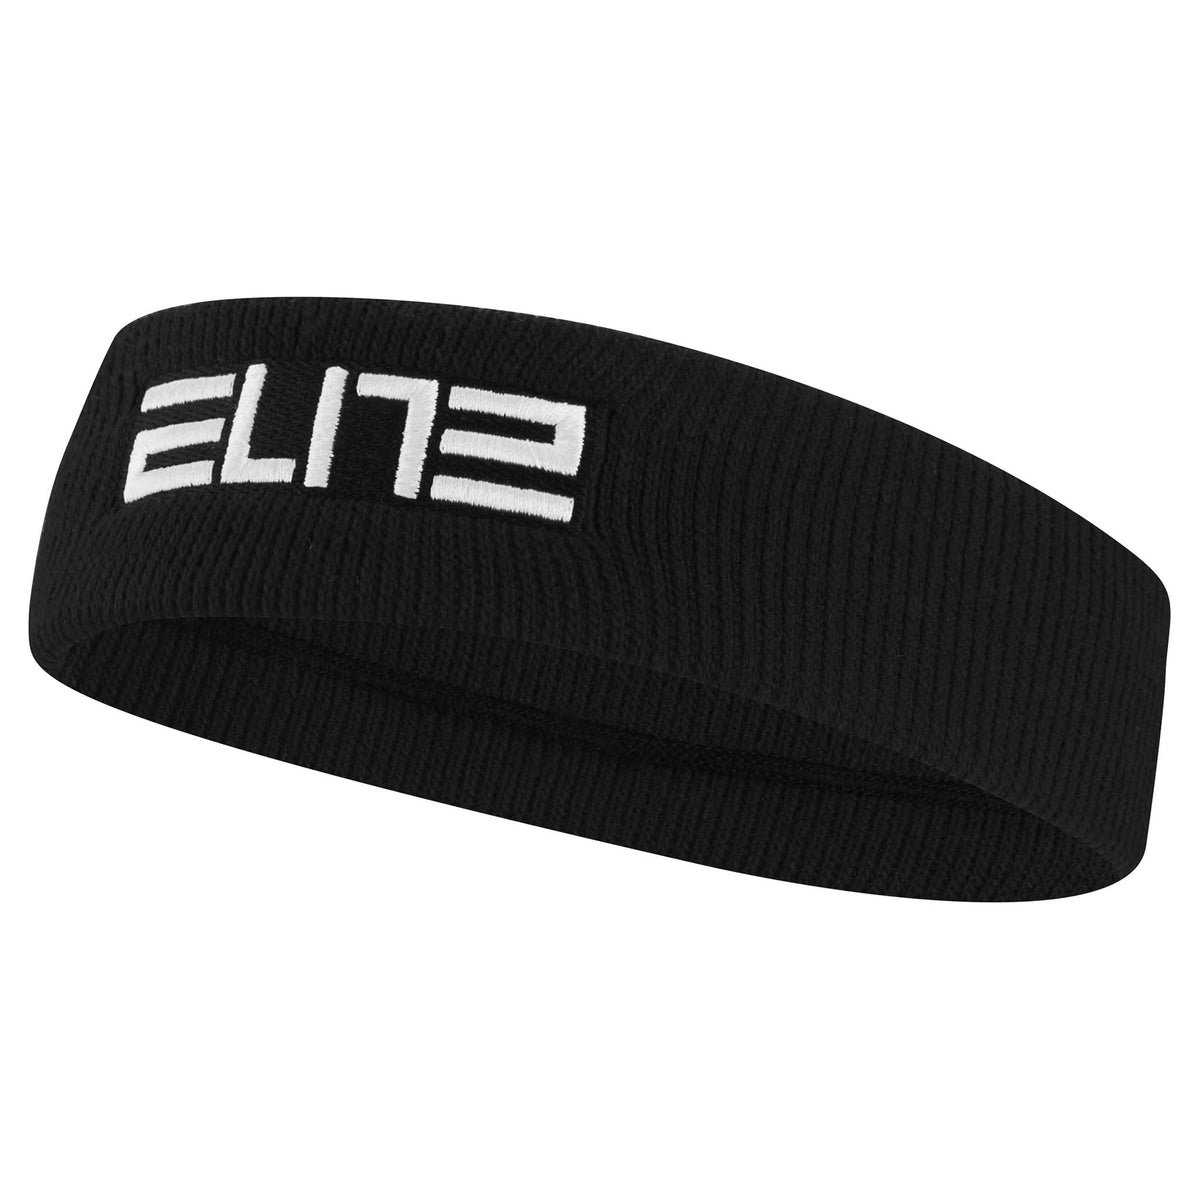 Nike Elite bandeaux serre-tête sport noir blanc